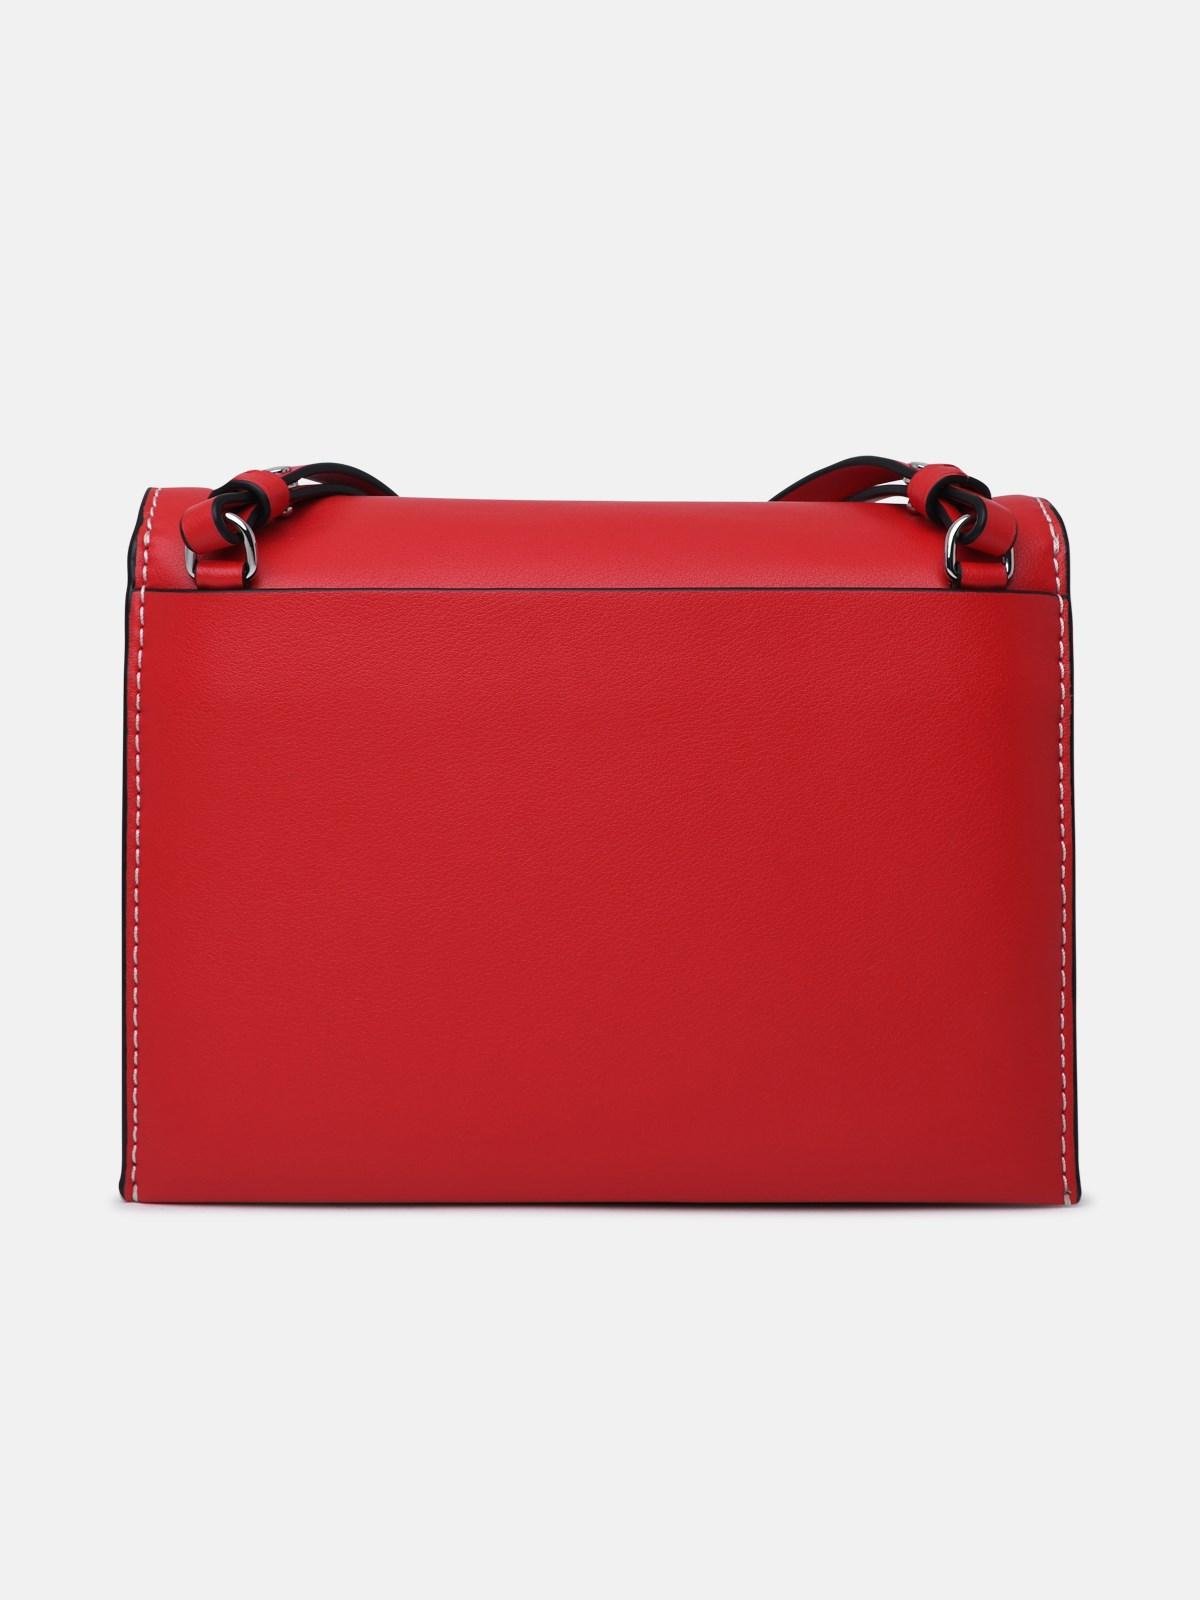 Proenza Schouler White Label Women's Crossbody Bags - Red